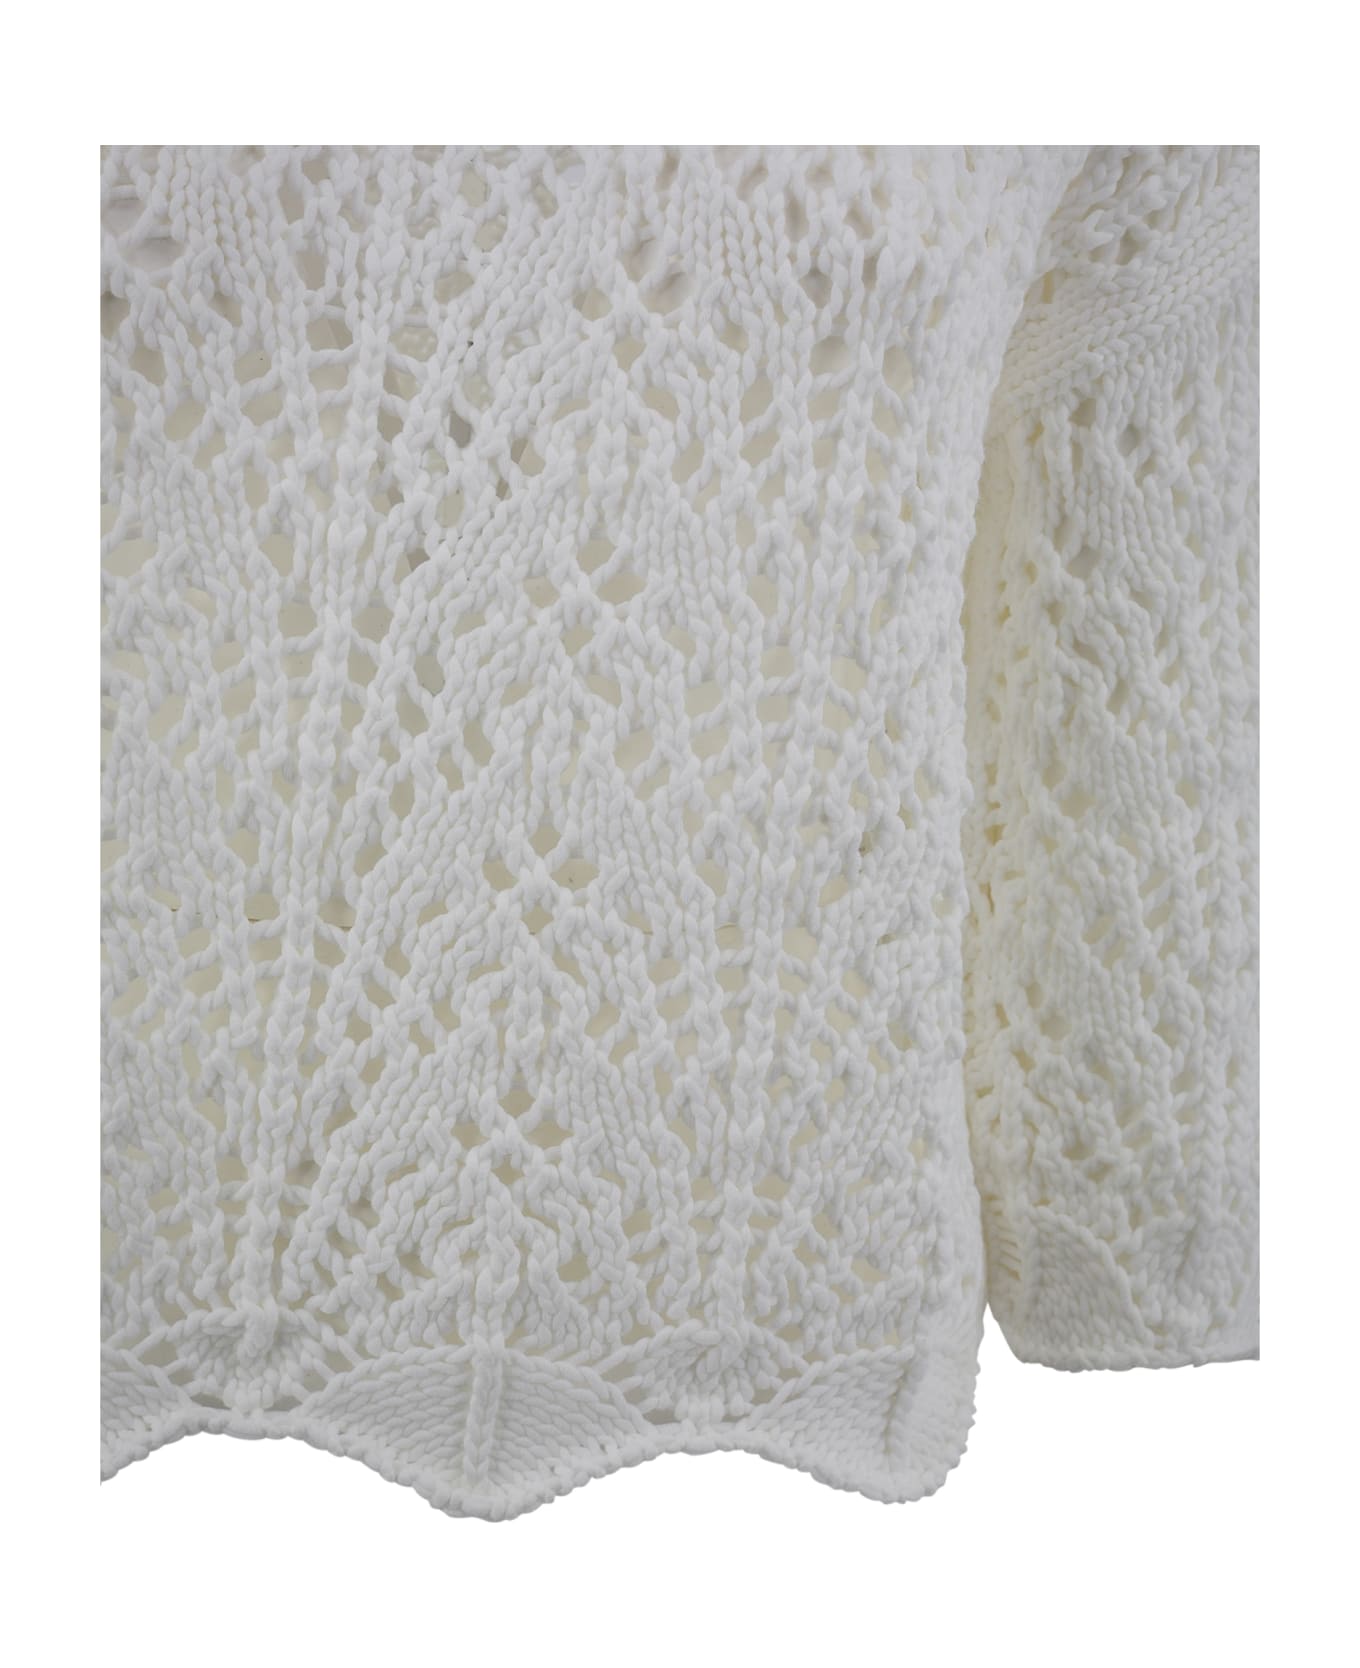 D.Exterior Cotton Crewneck Sweater - White